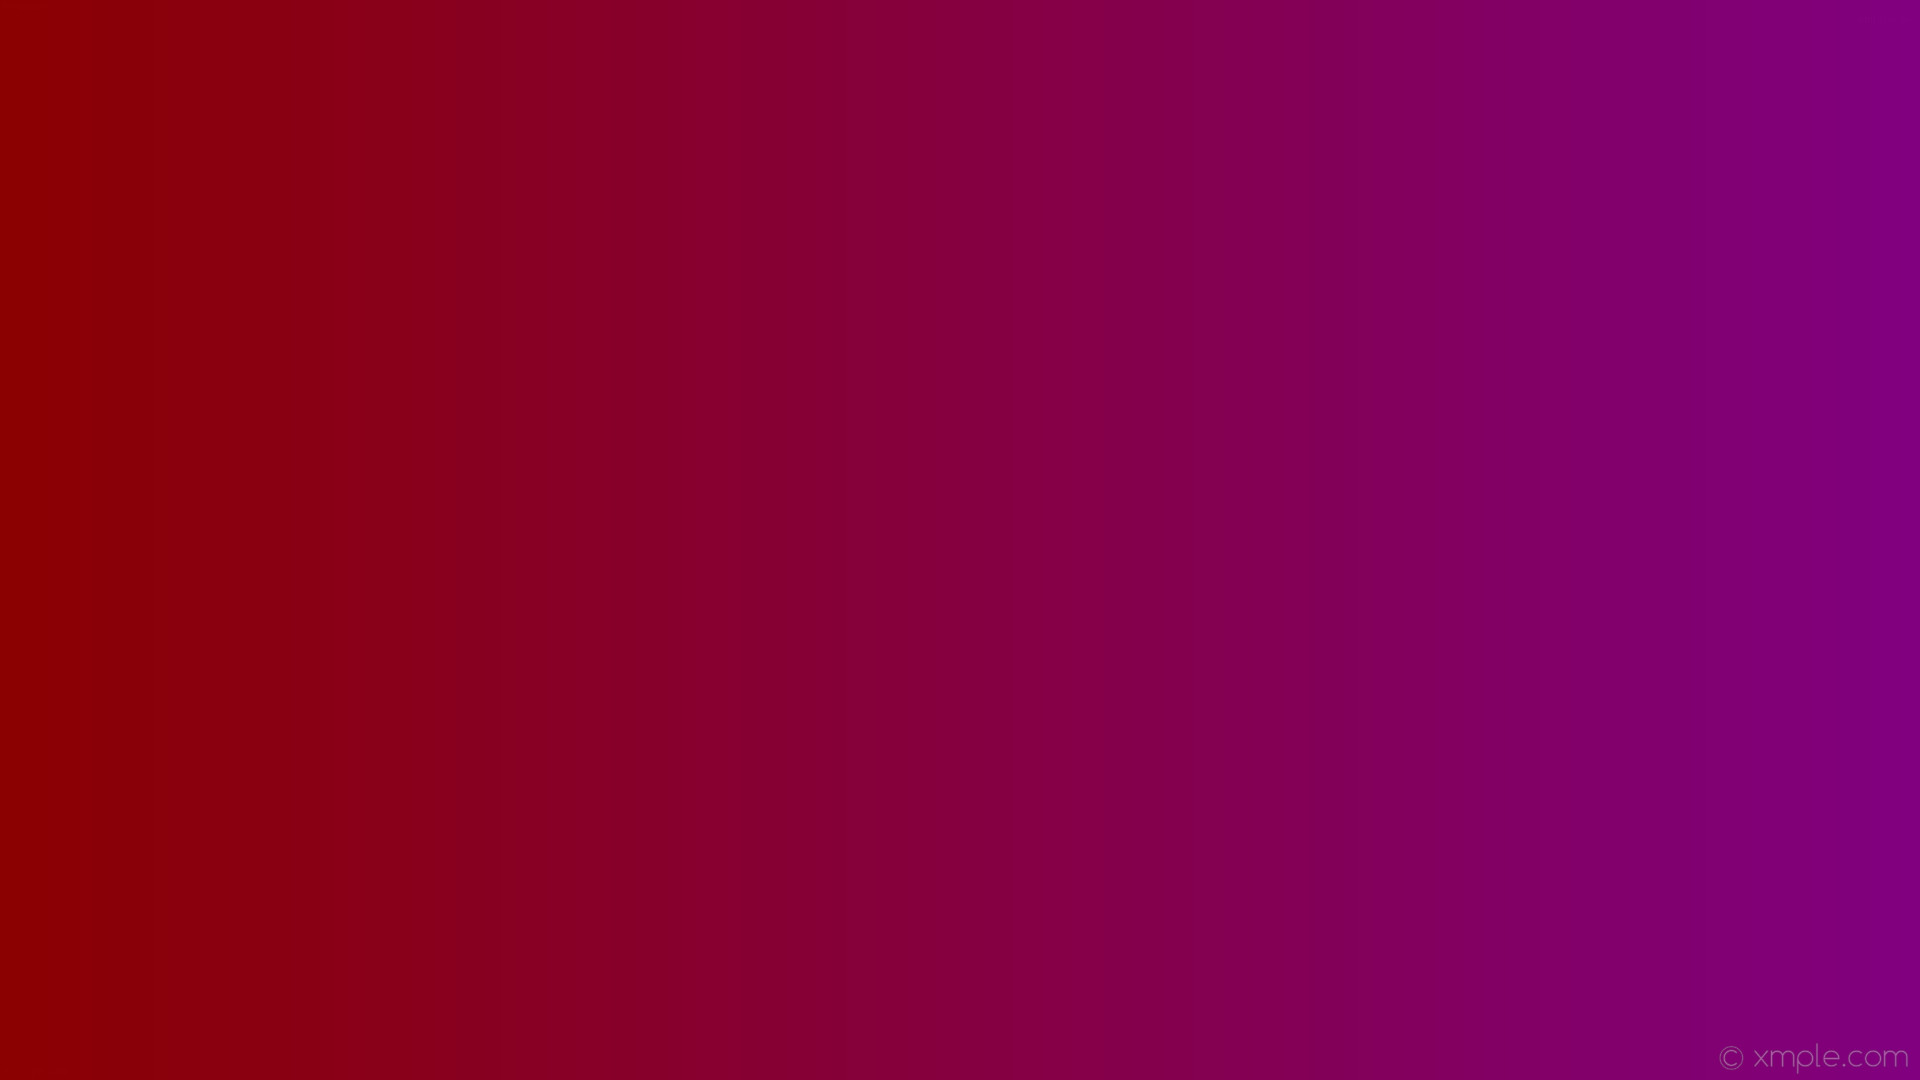 wallpaper purple red gradient linear dark red #800080 #8b0000 0Â°